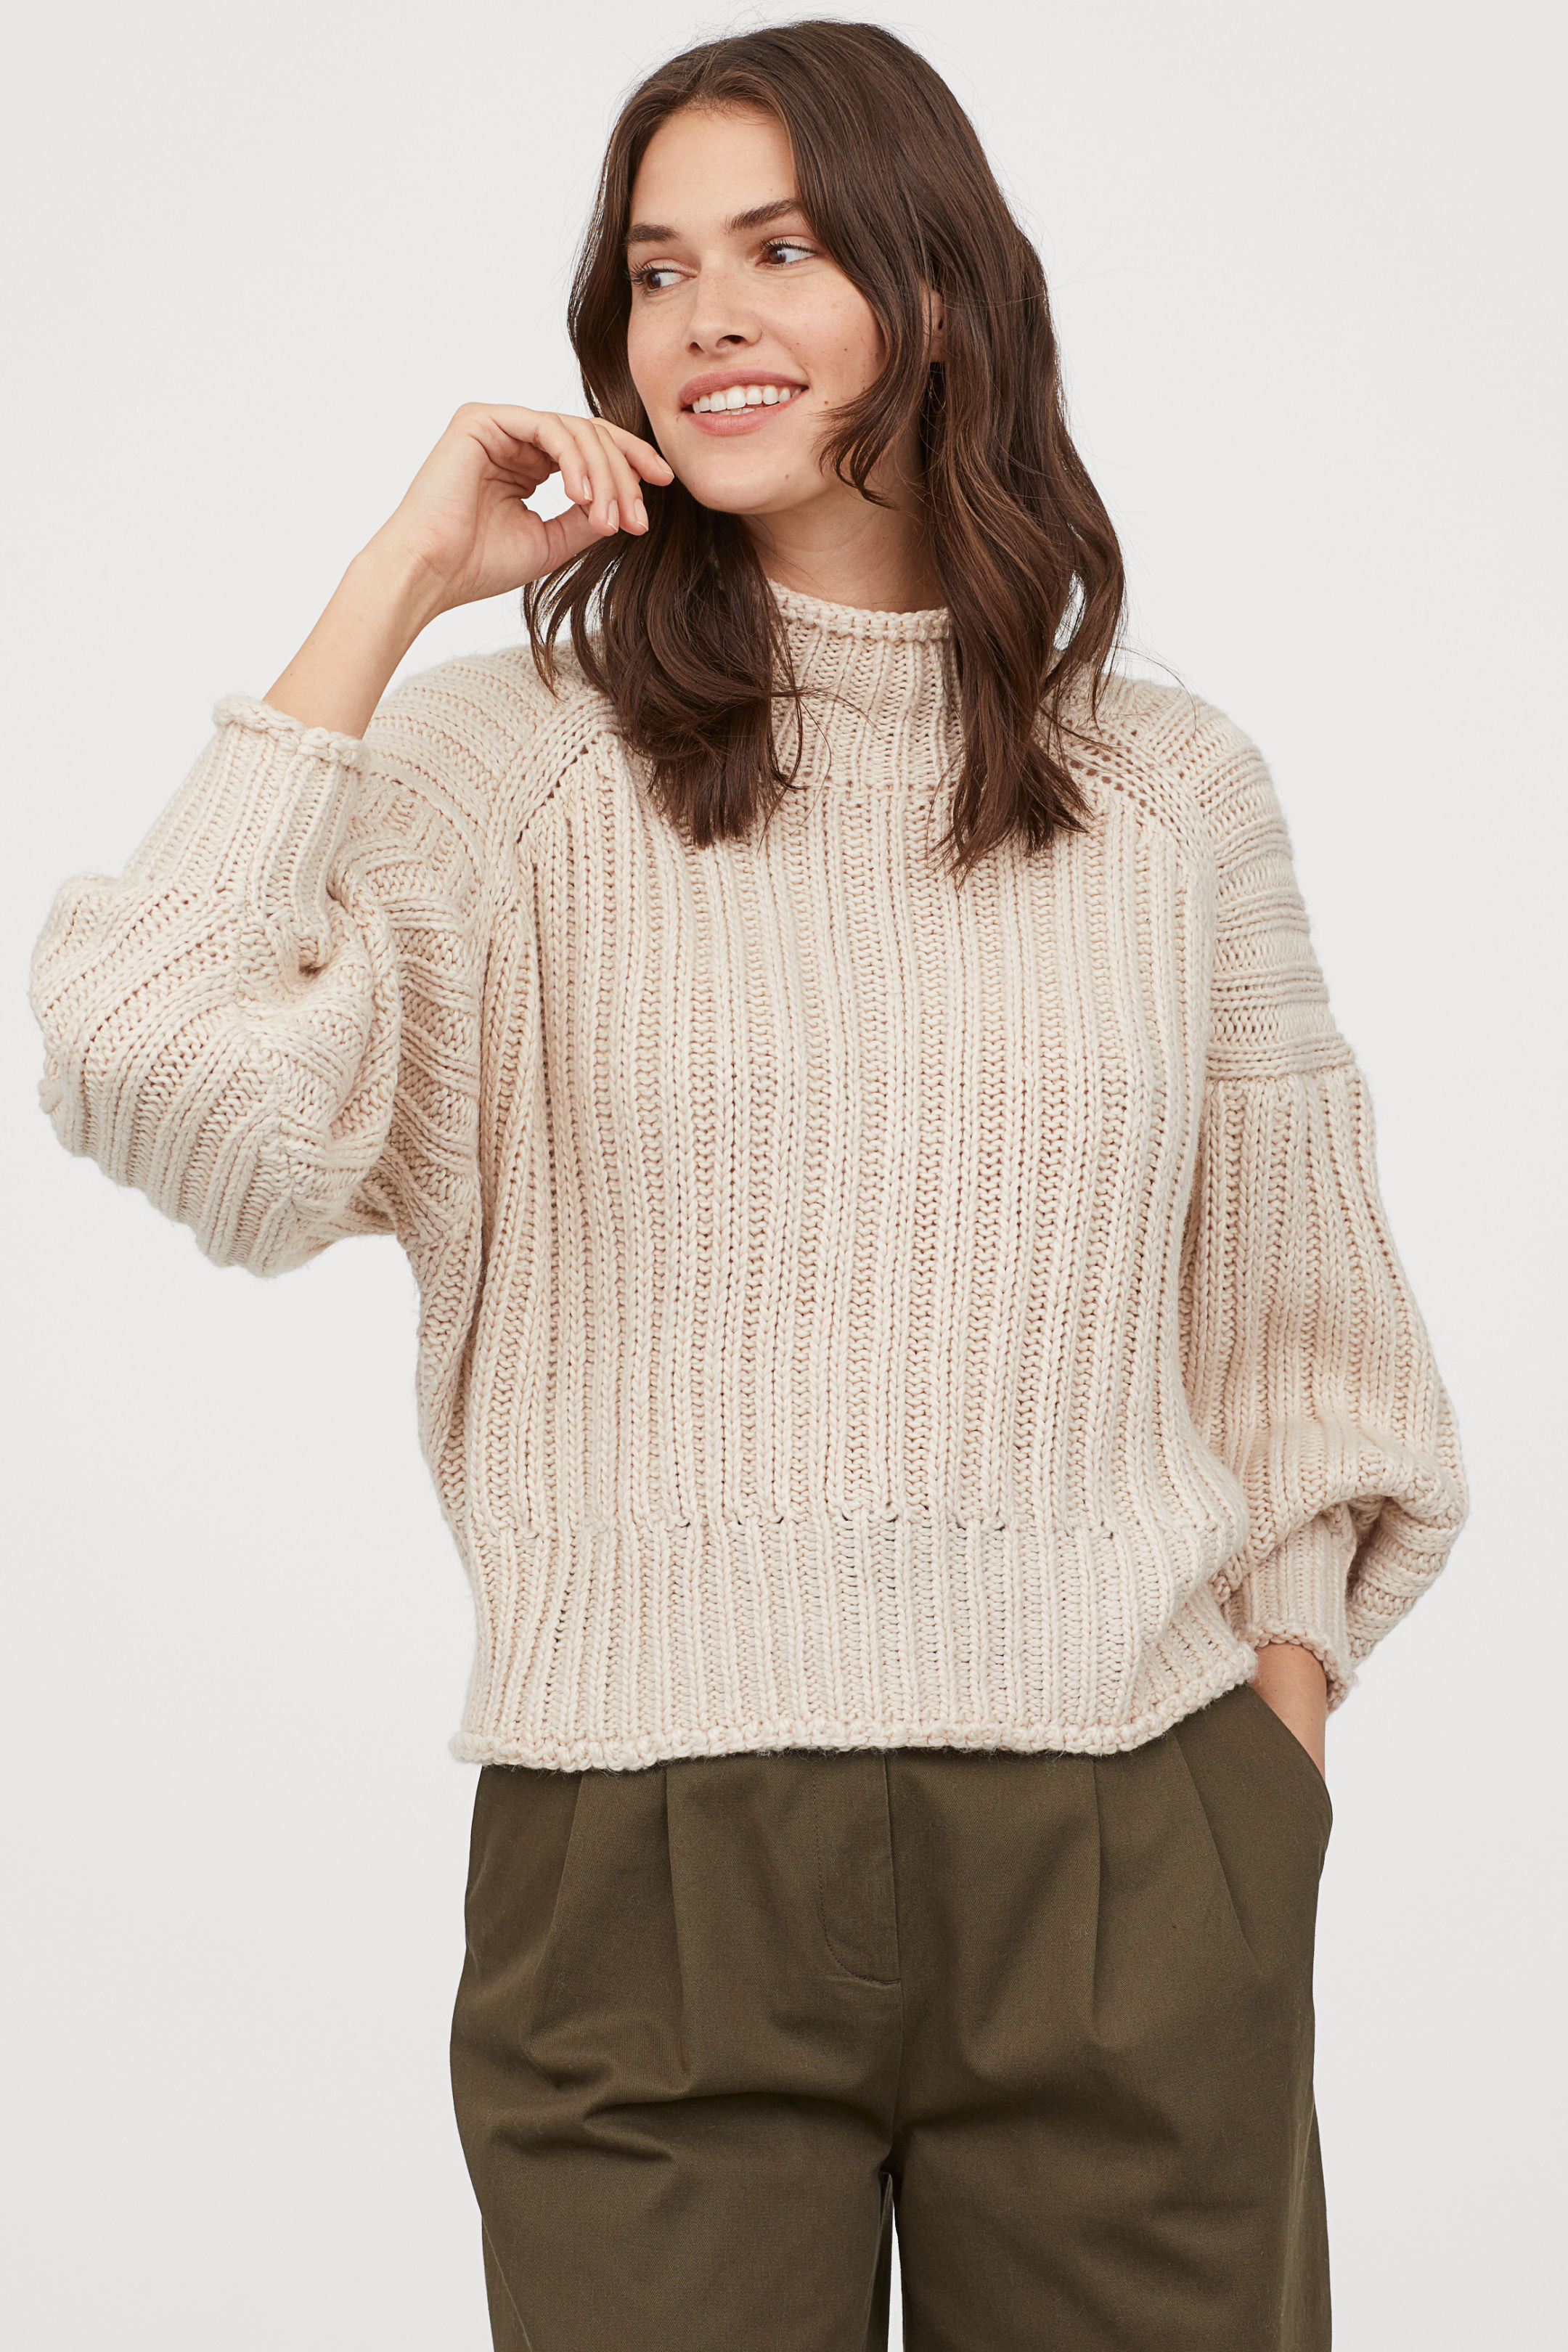 h&m basic sweater